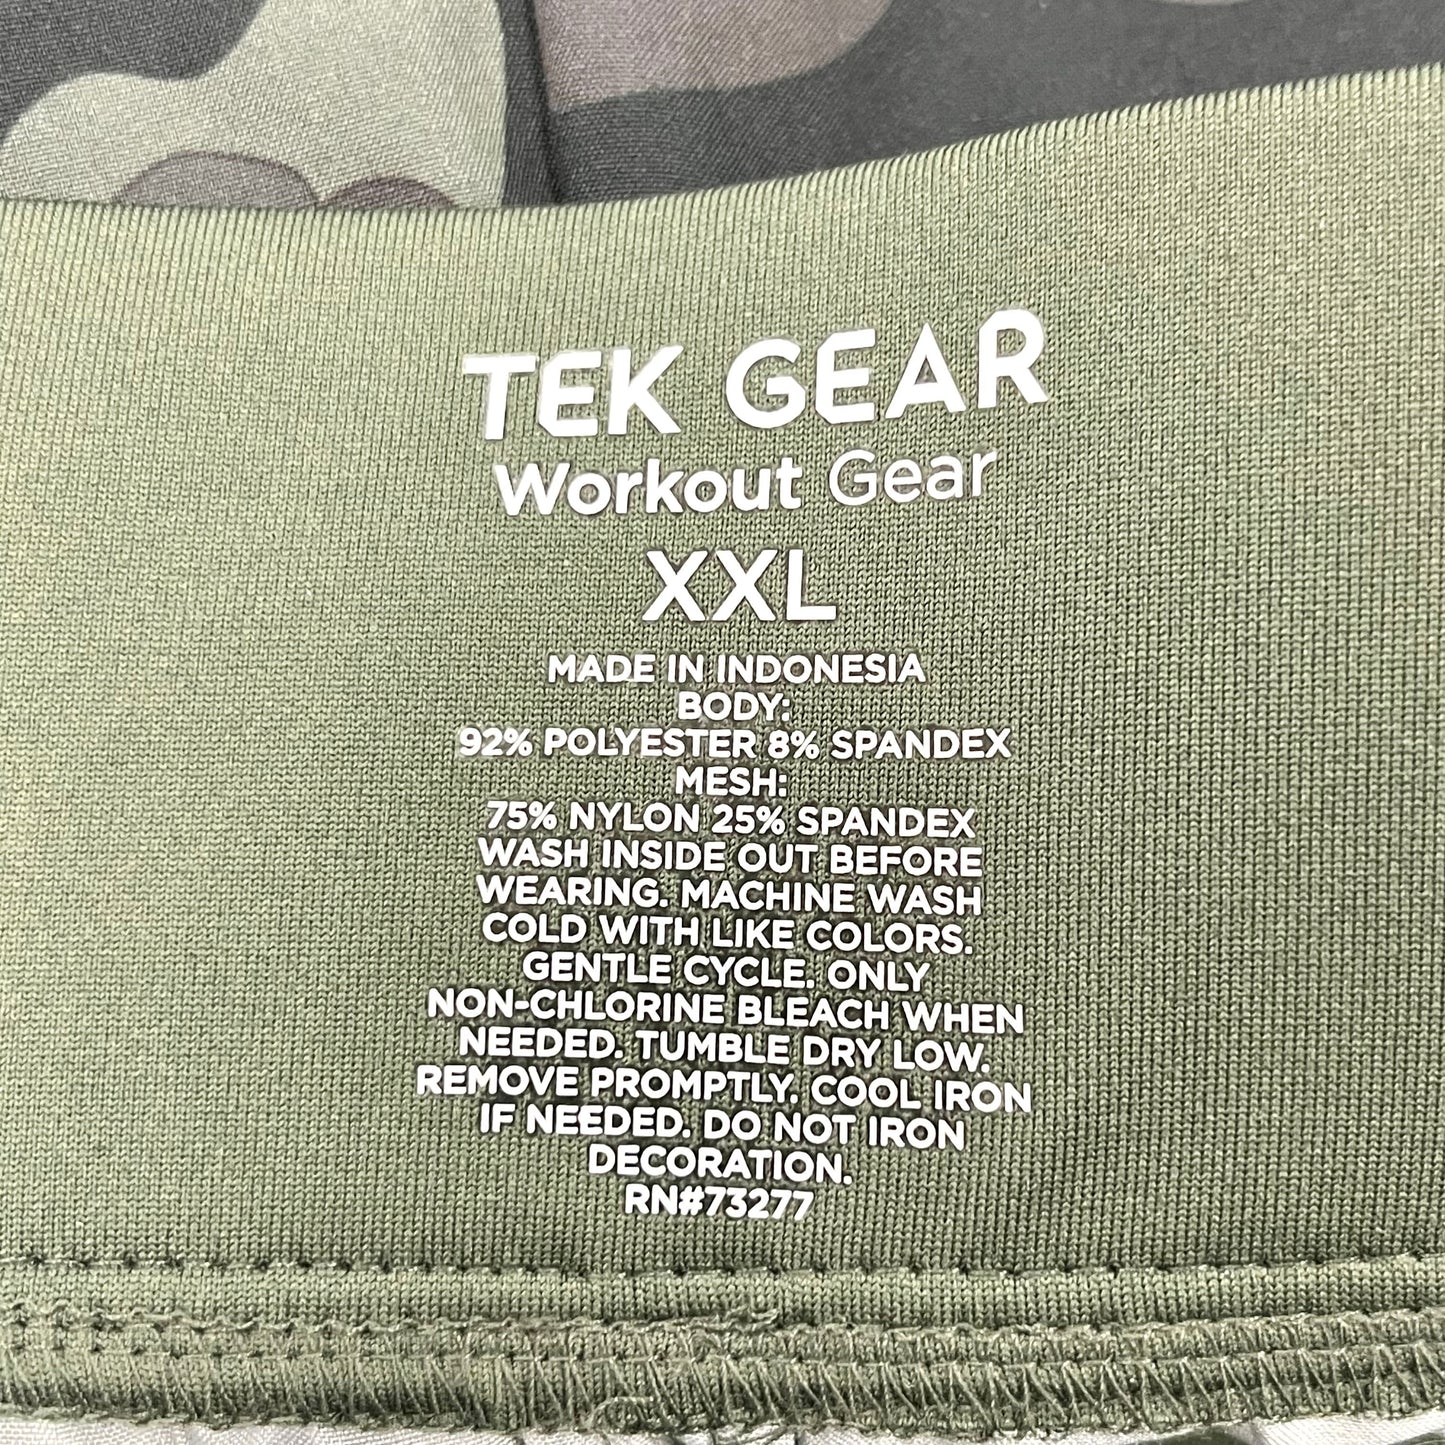 Athletic Shorts By Tek Gear  Size: 1x